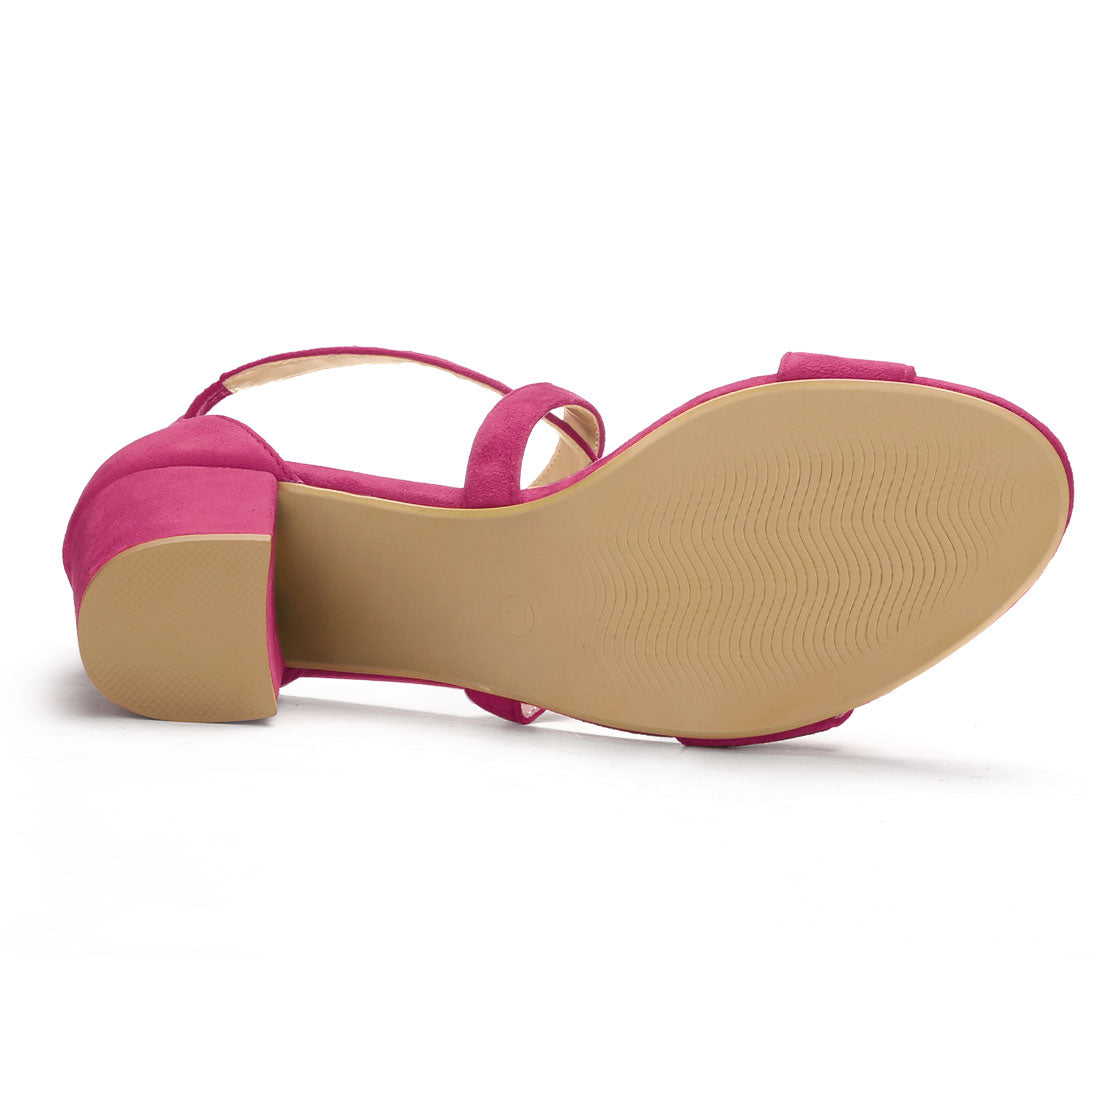 Allegra K Straps Mid Heel Ankle Strap Sandals Hot Pink